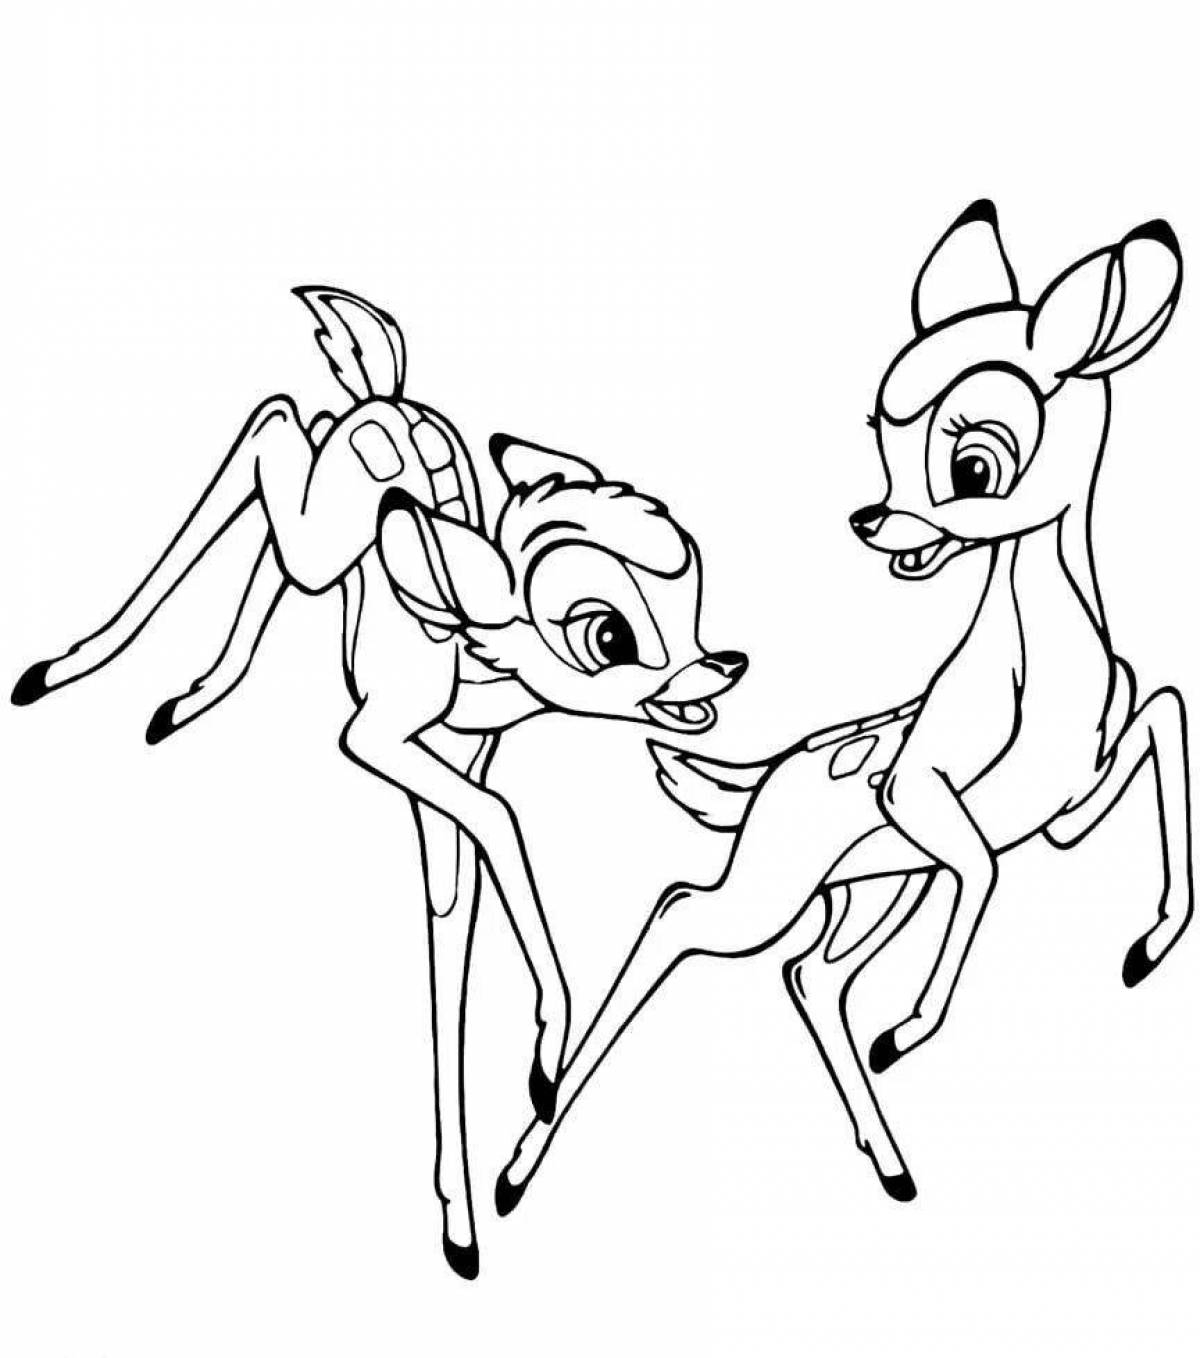 Coloring page charming bambi faun